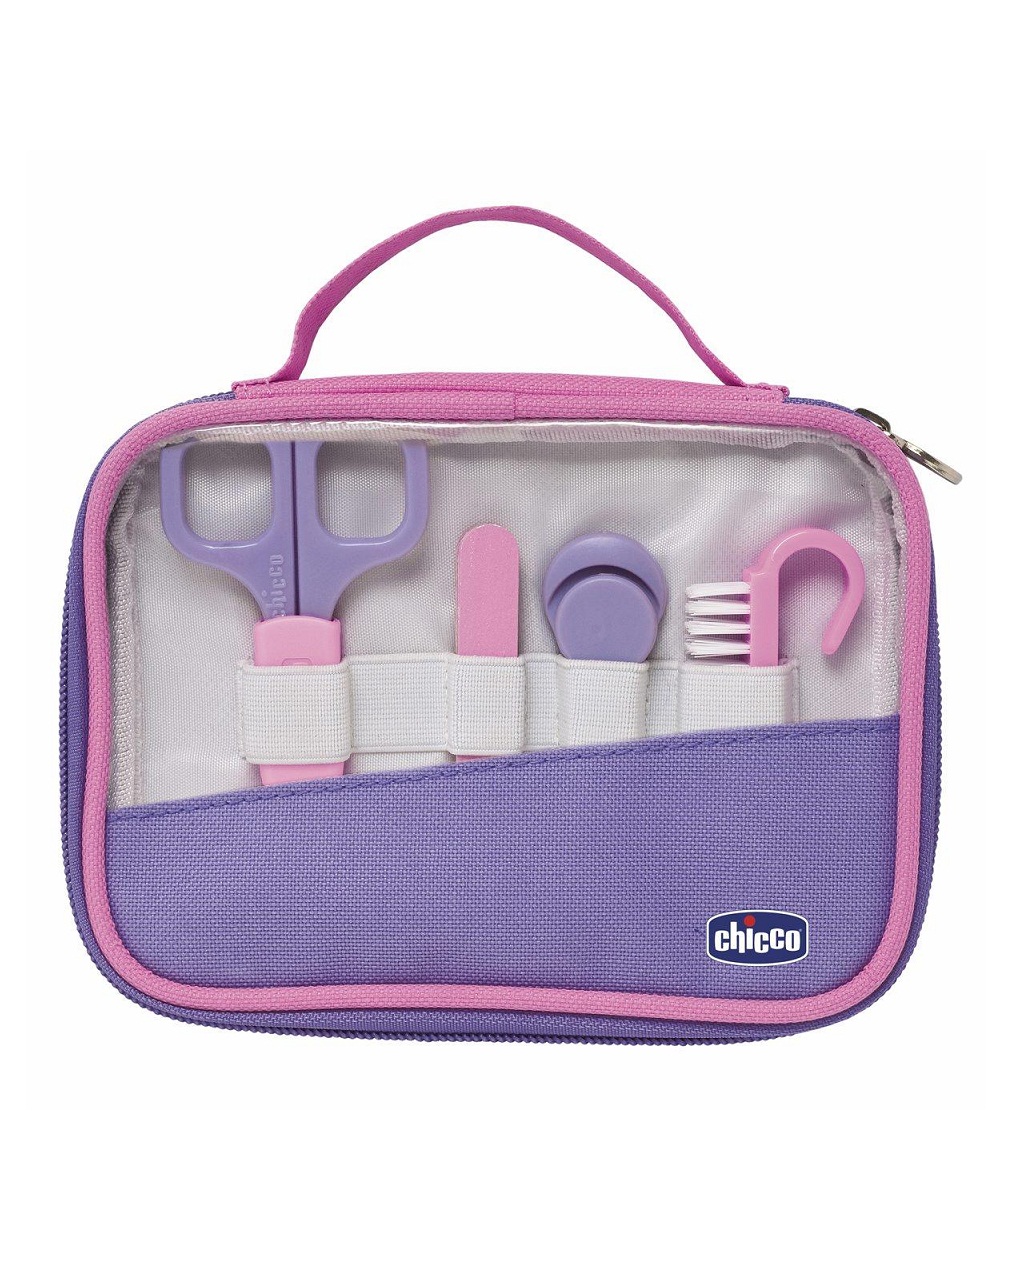 Chicco - set de higiene happy hands - rosa - Chicco